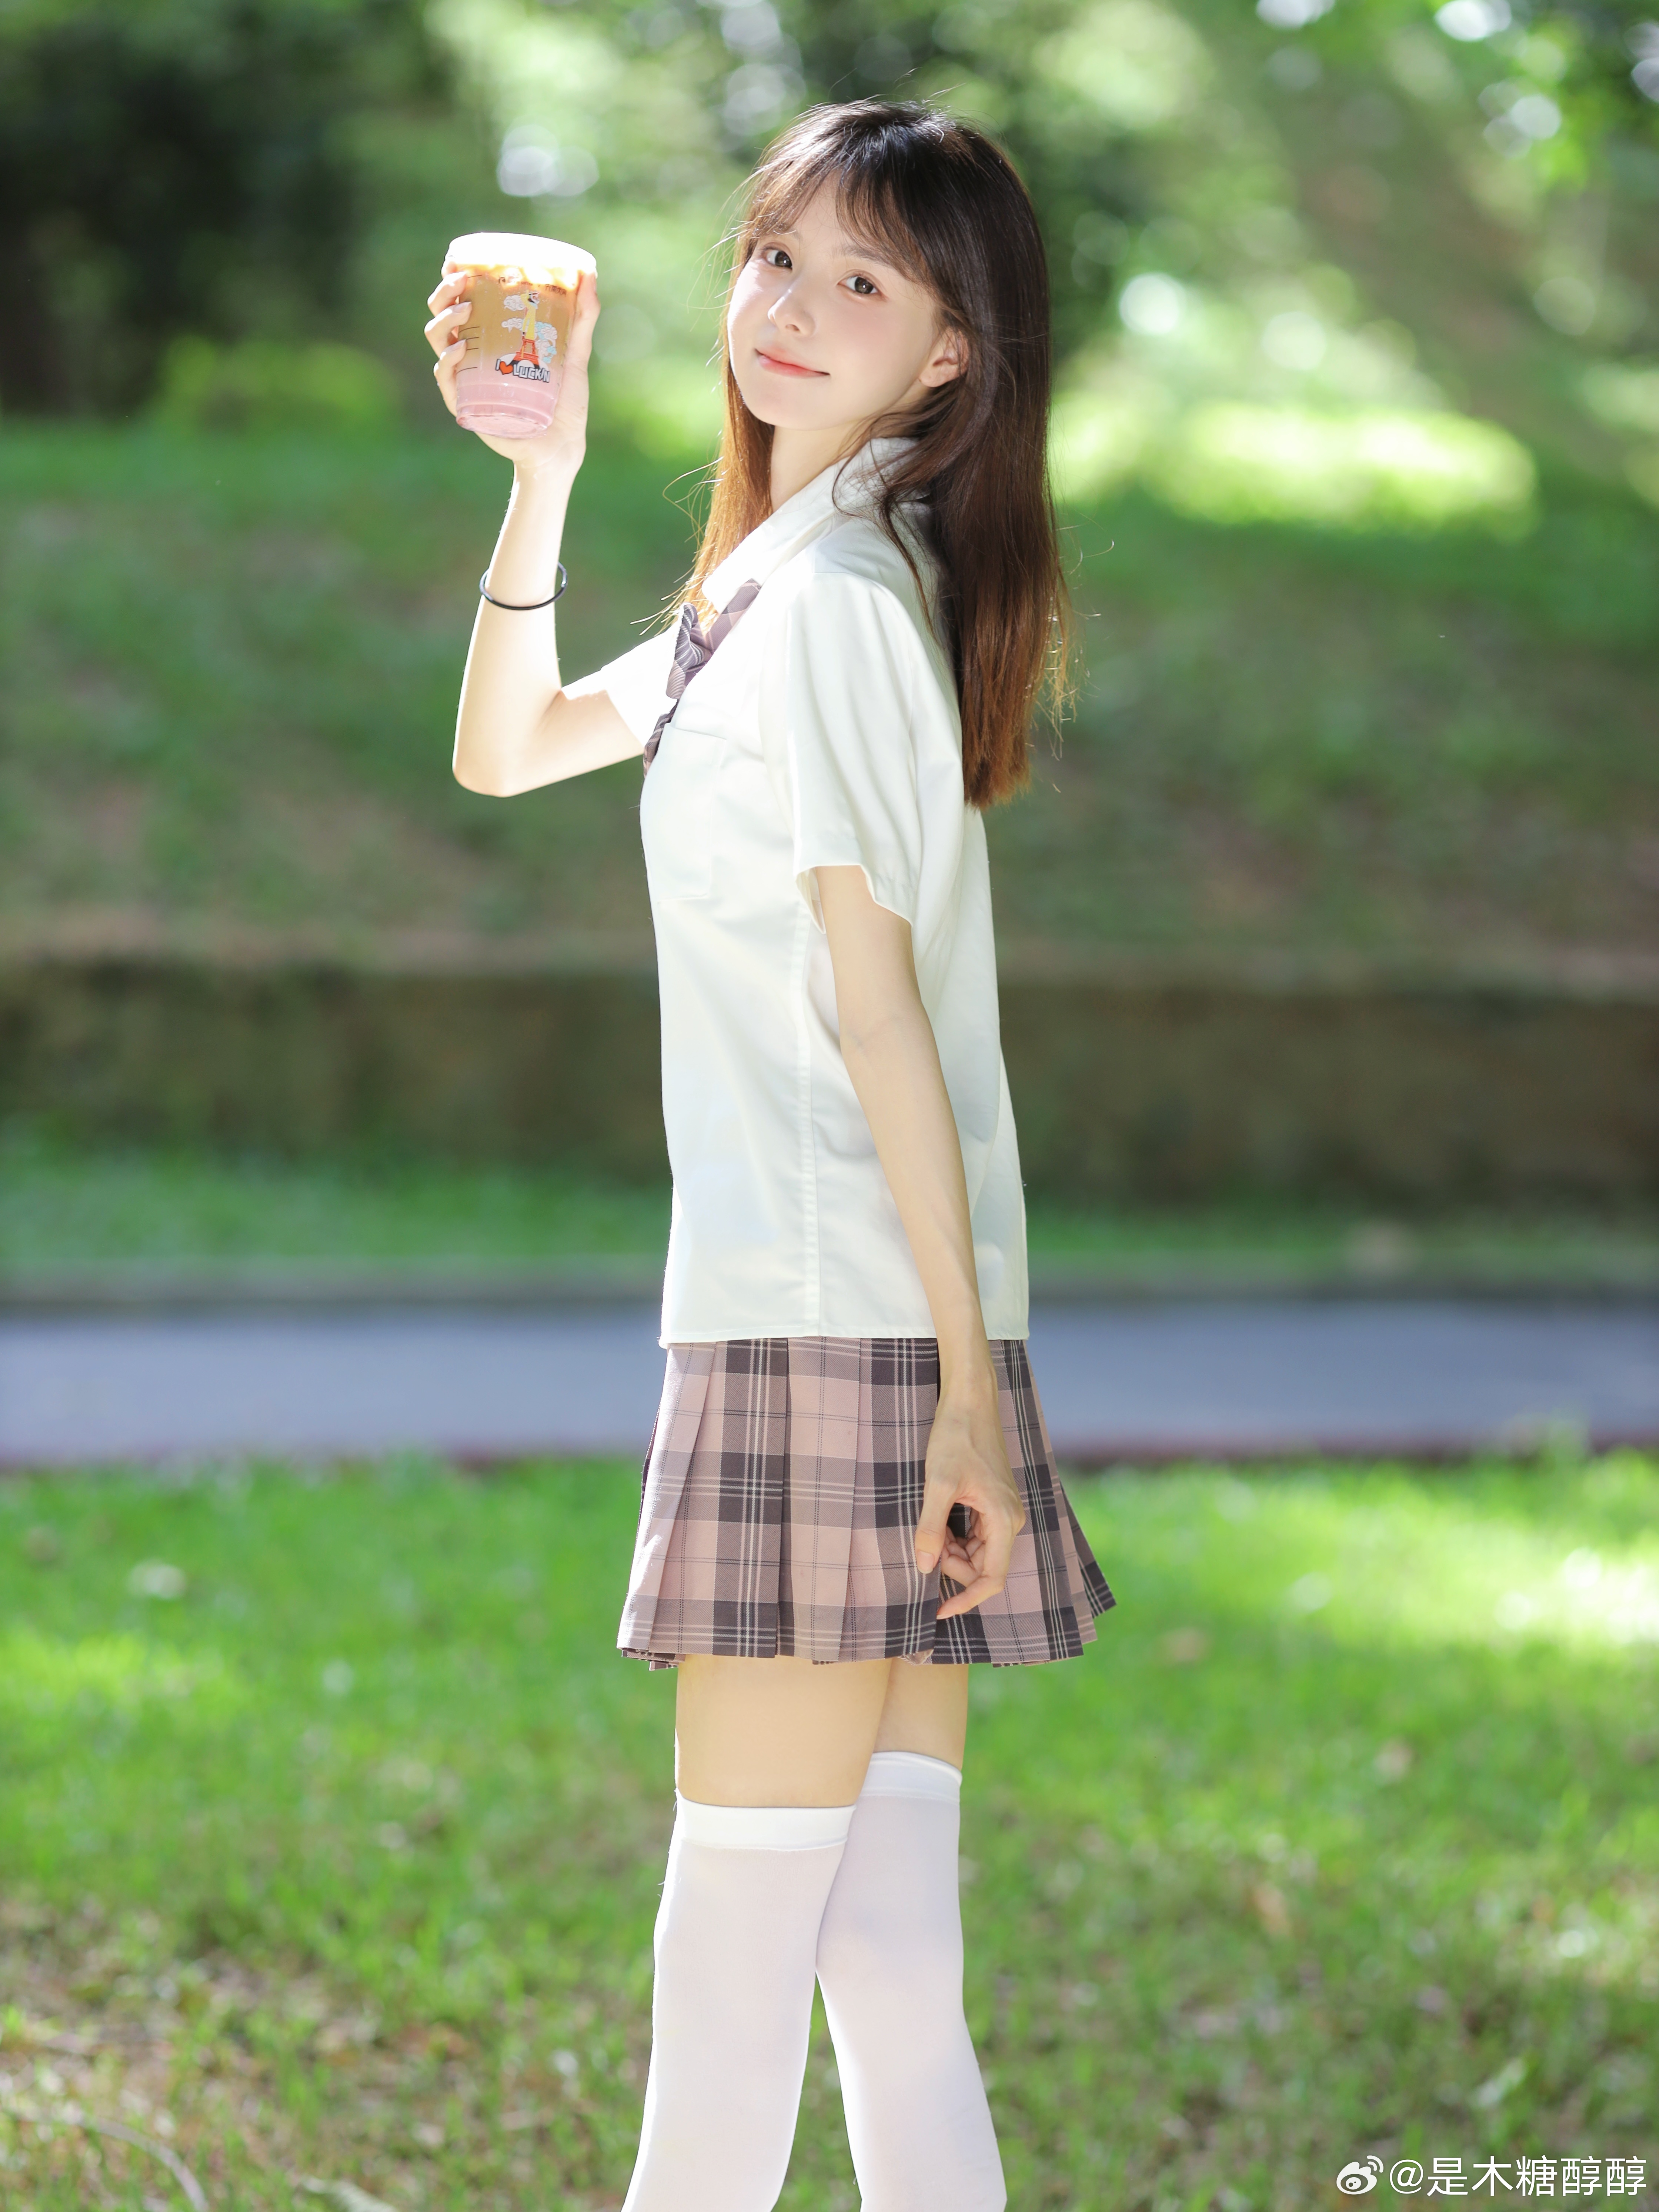 Women Asian Skirt Schoolgirl School Uniform Watermarked Weibo Women Outdoors Sunlight Long Hair Brun 4480x5973